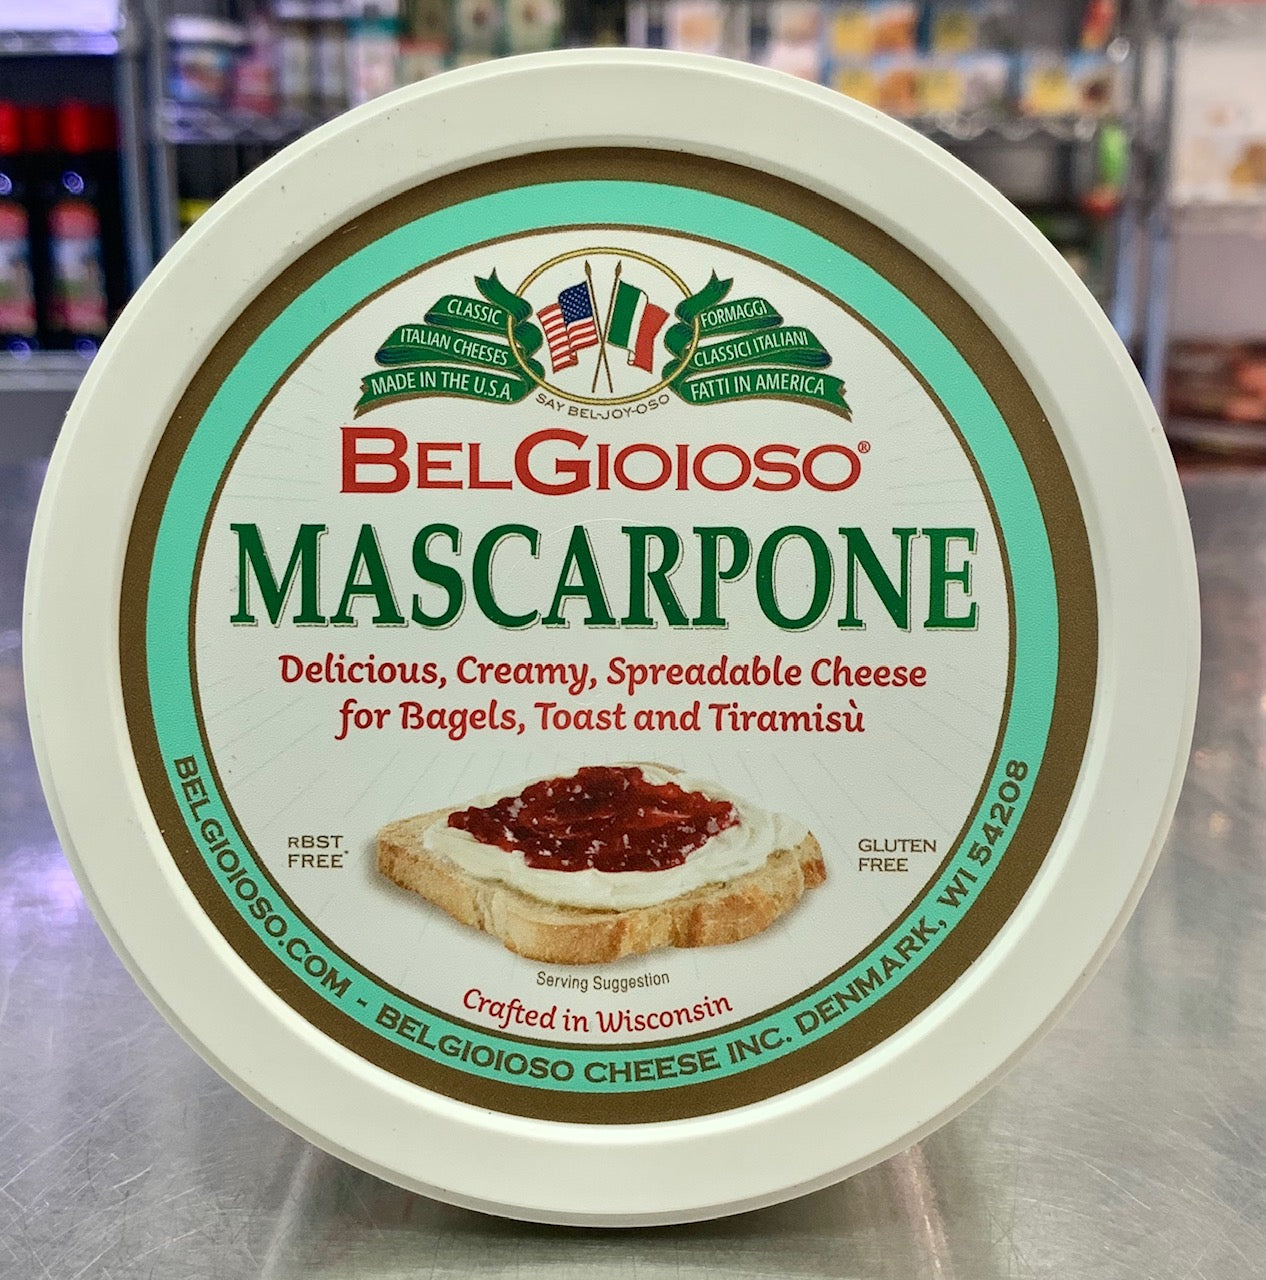 Mascarpone Cheese